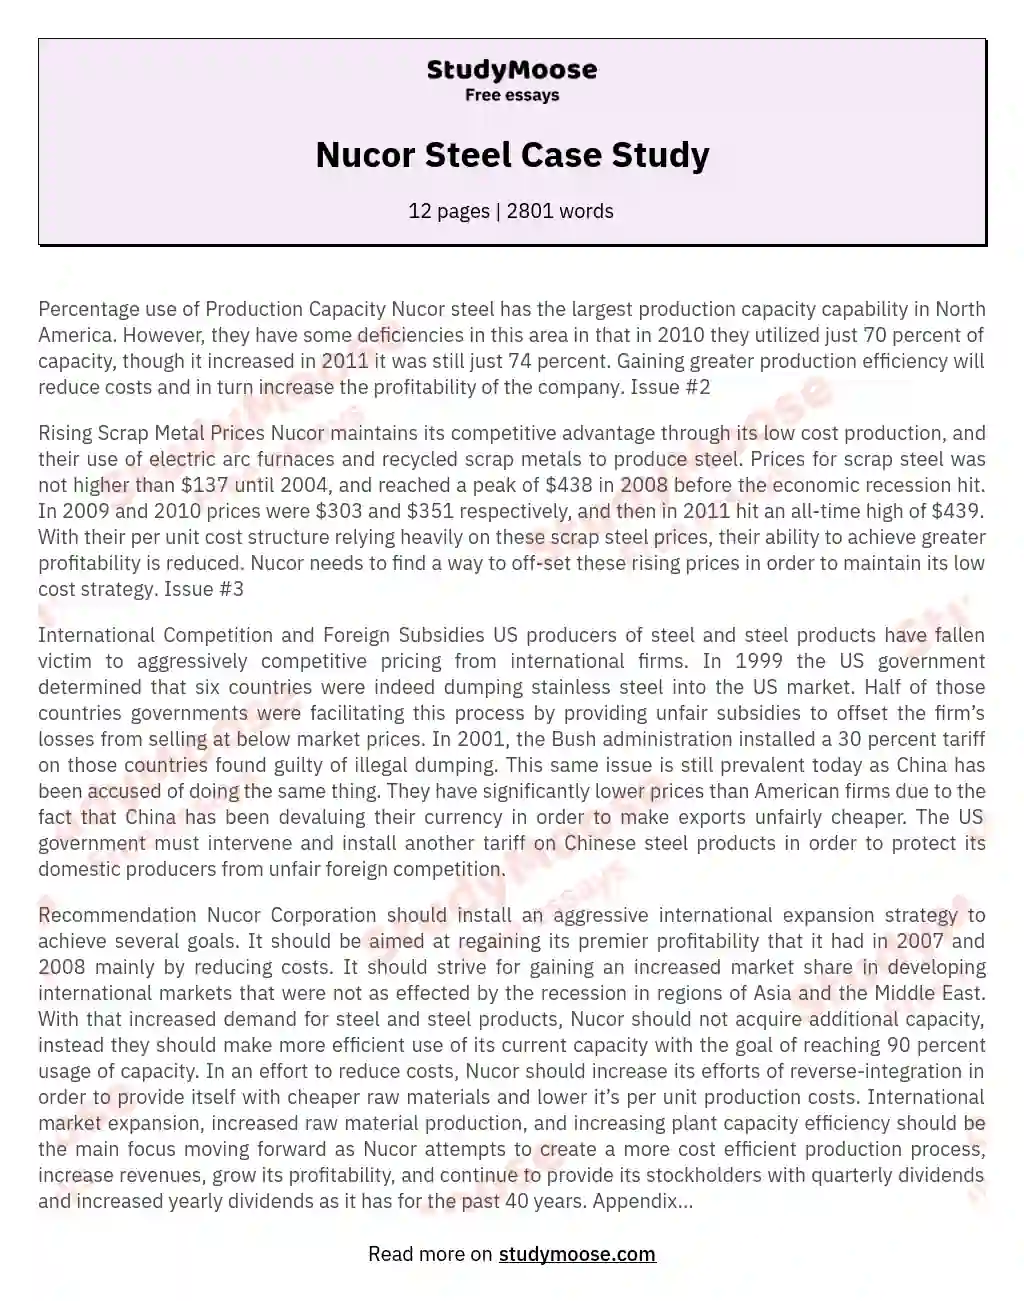 Nucor Steel Case Study essay